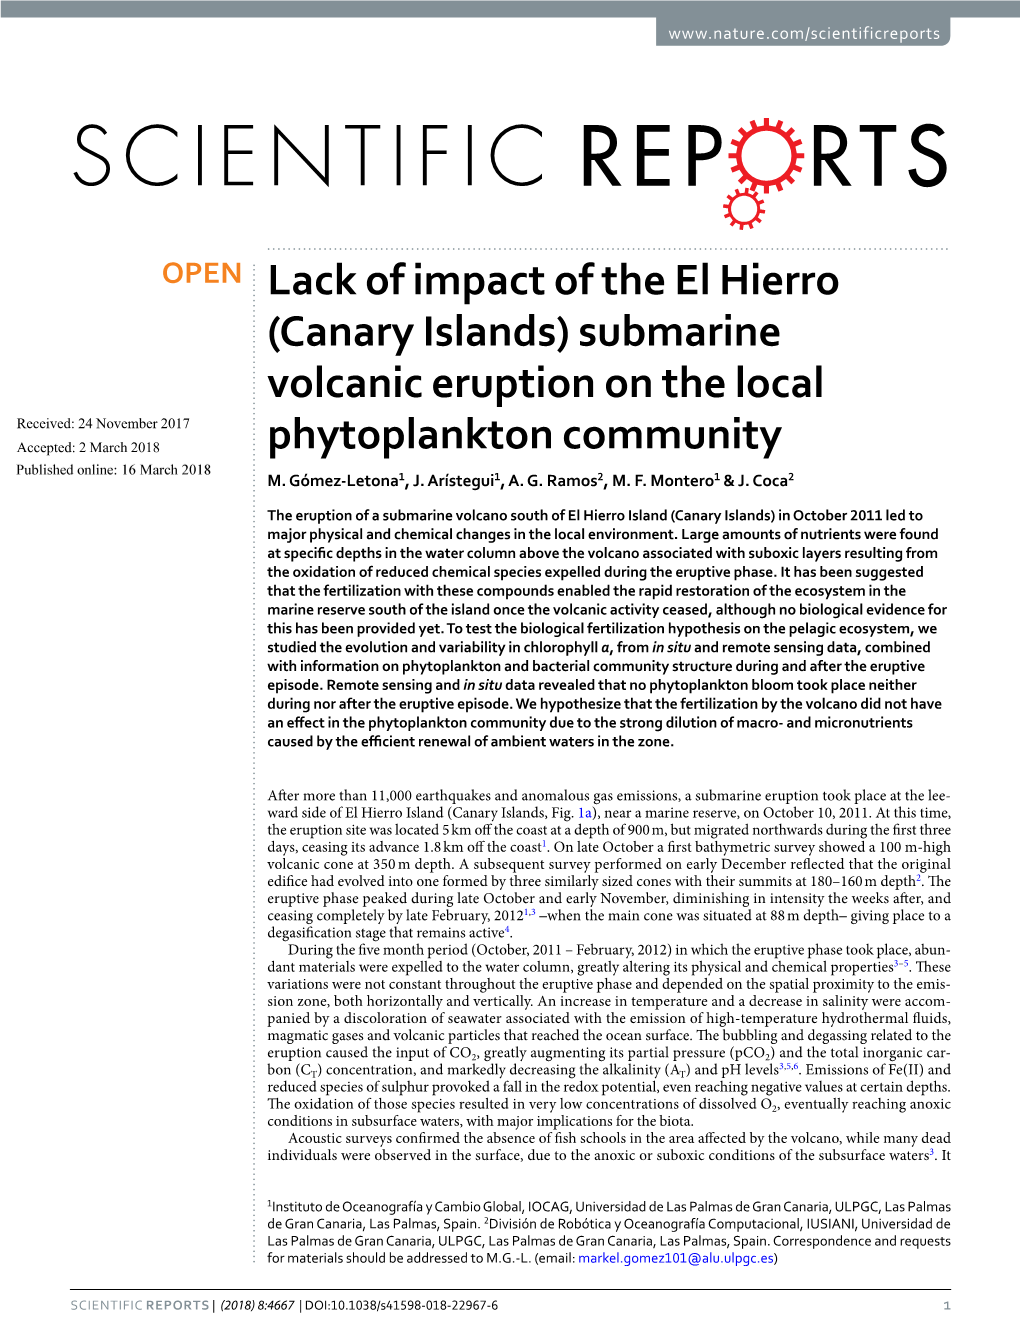 (Canary Islands) Submarine Volcanic Eruption on the Local Phytoplankton